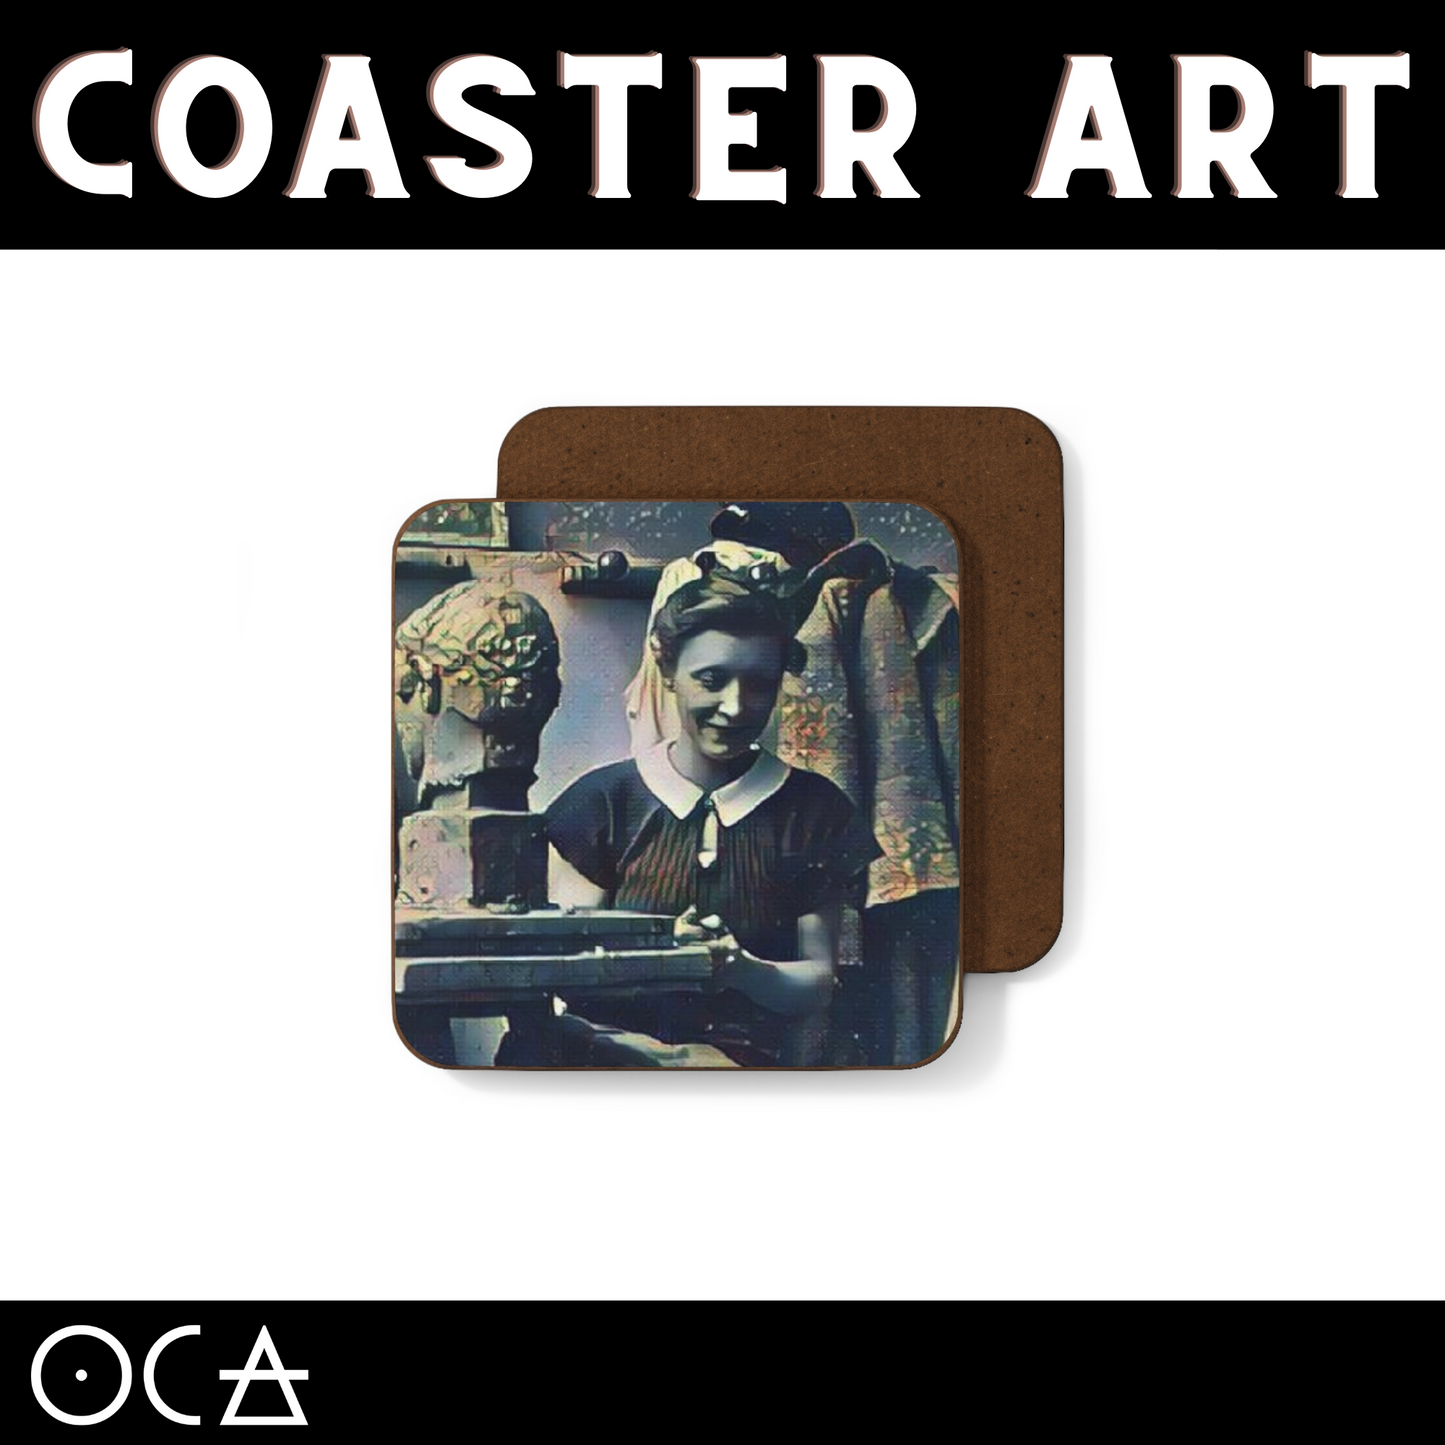 Louise Bourgeois Coaster Art